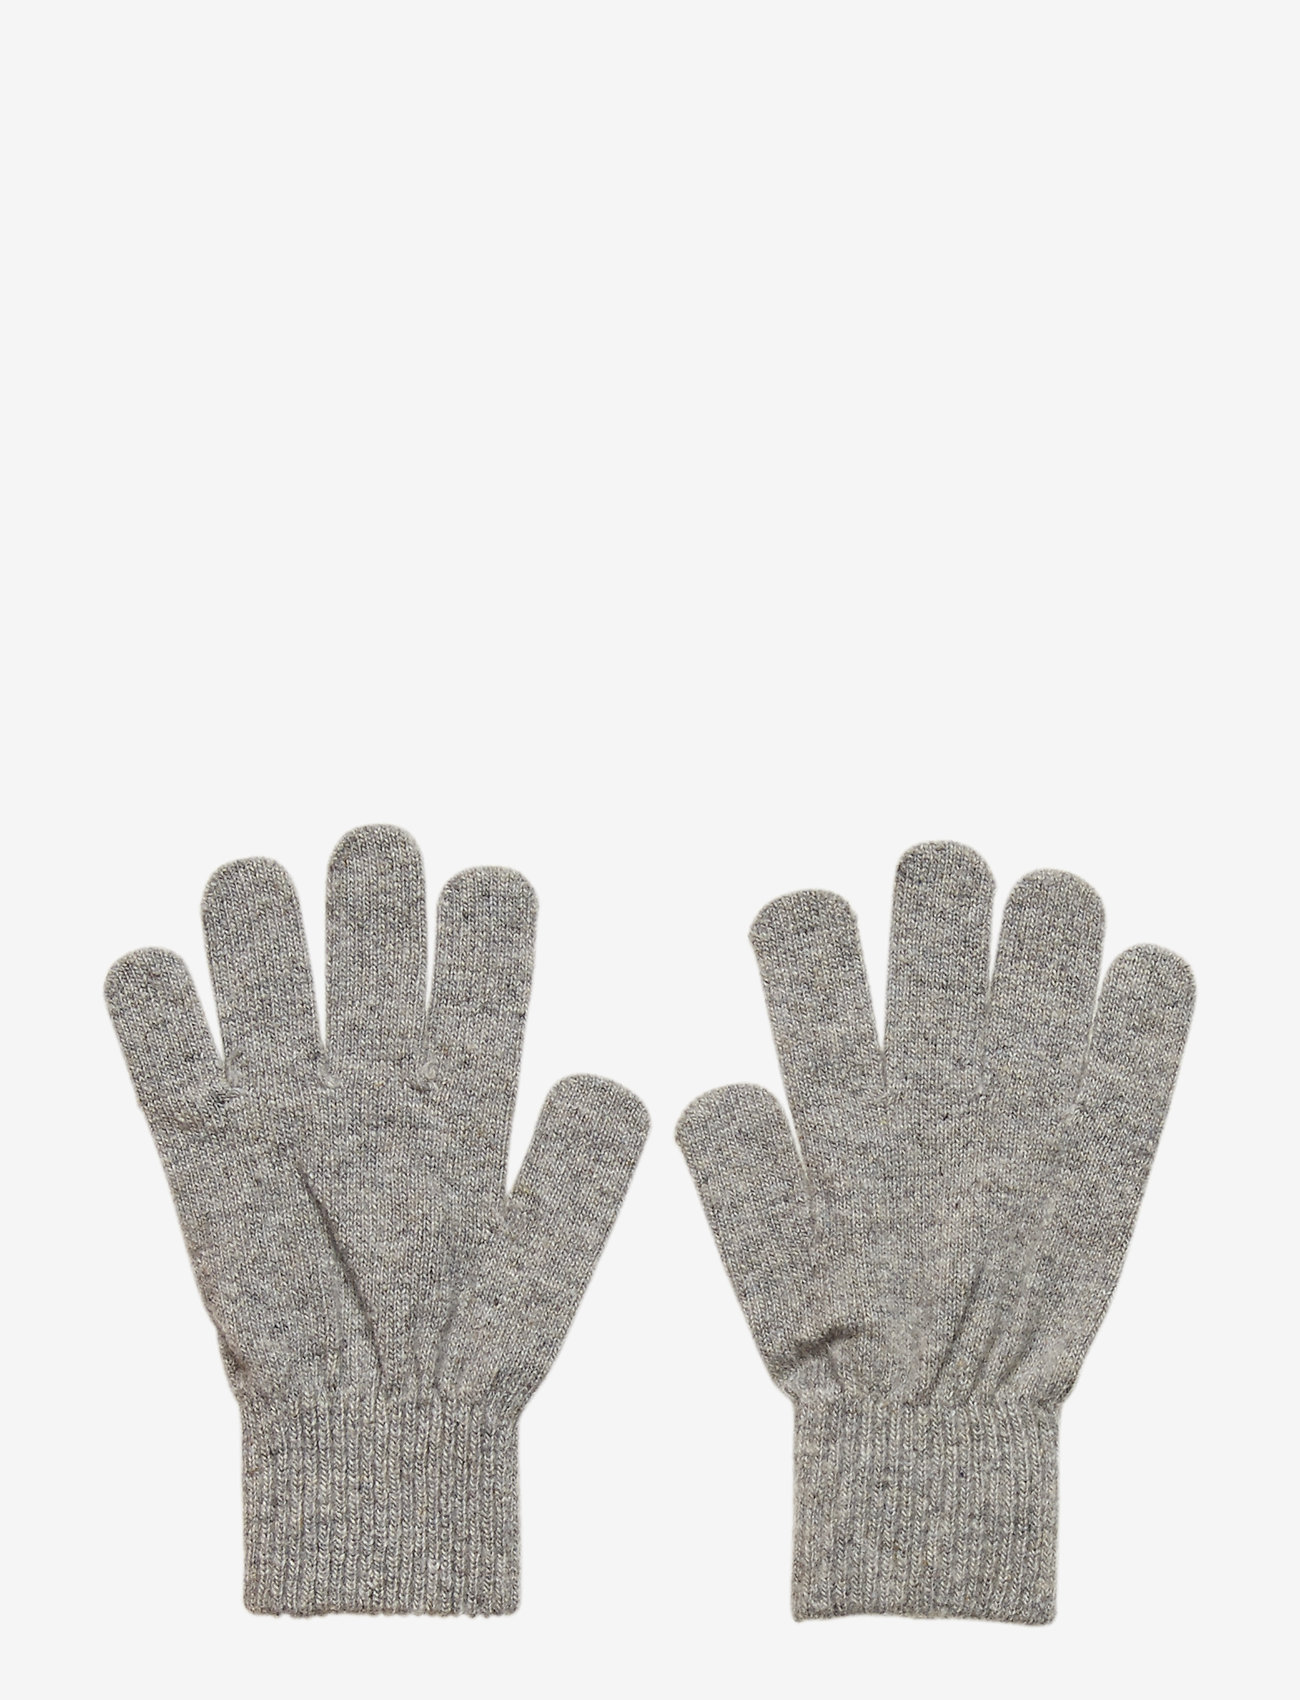 CeLaVi - Basic magic finger gloves - lowest prices - grey - 0